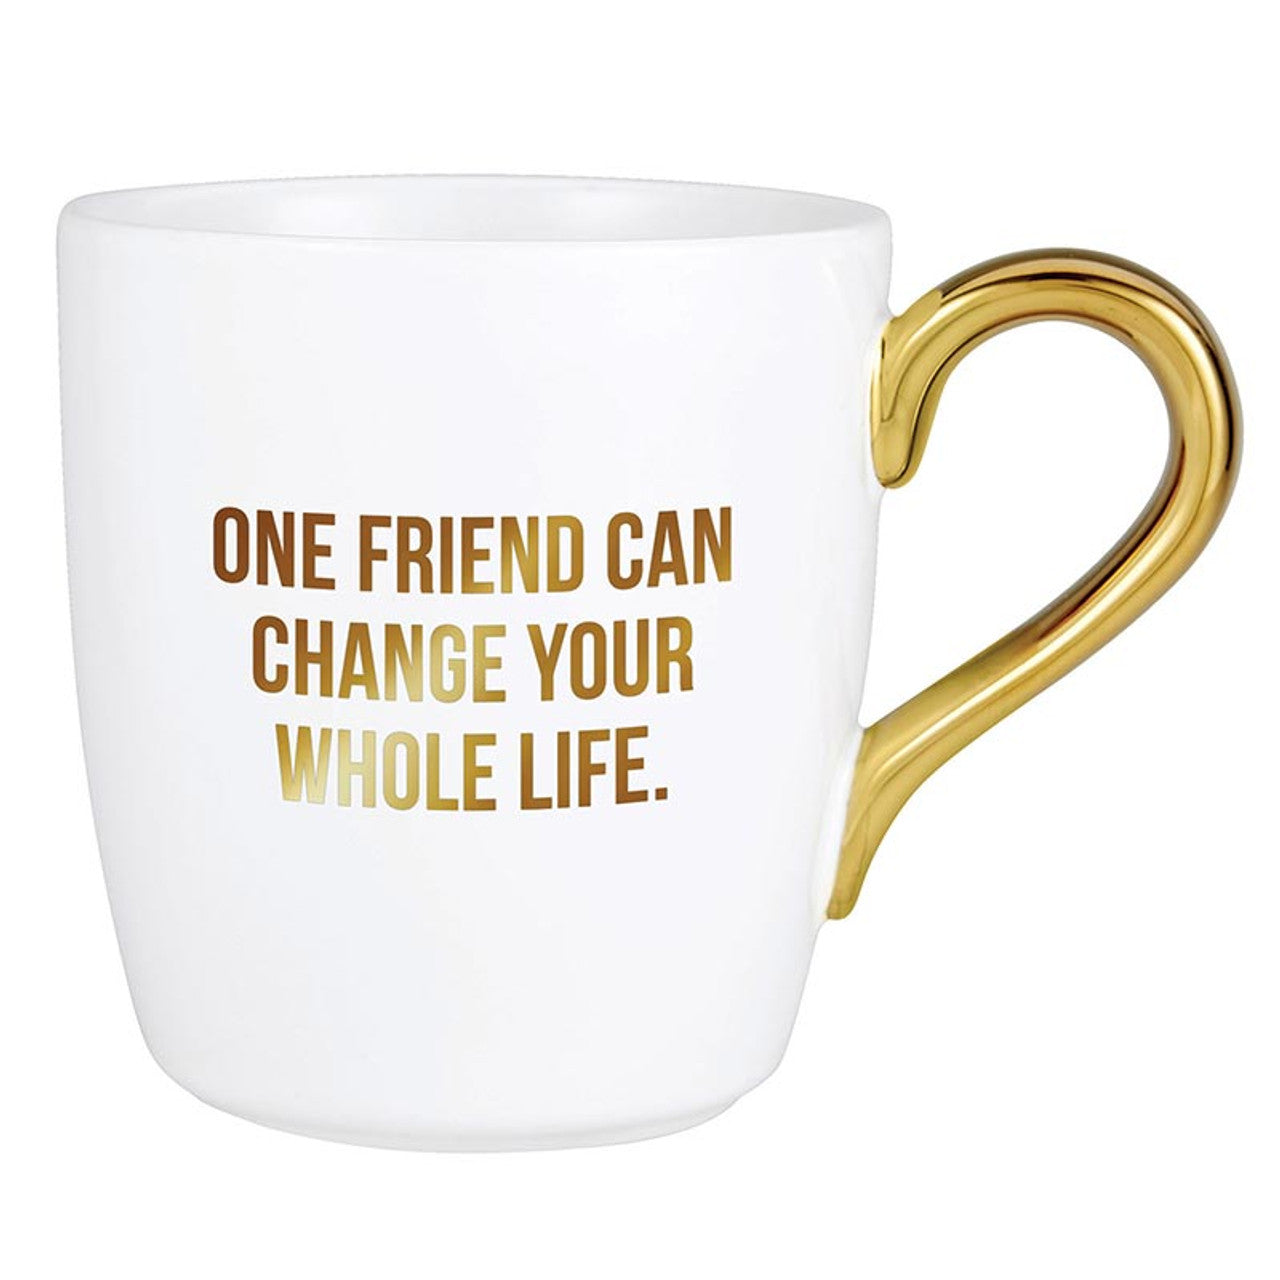 That's All Gold Mug - One Friend